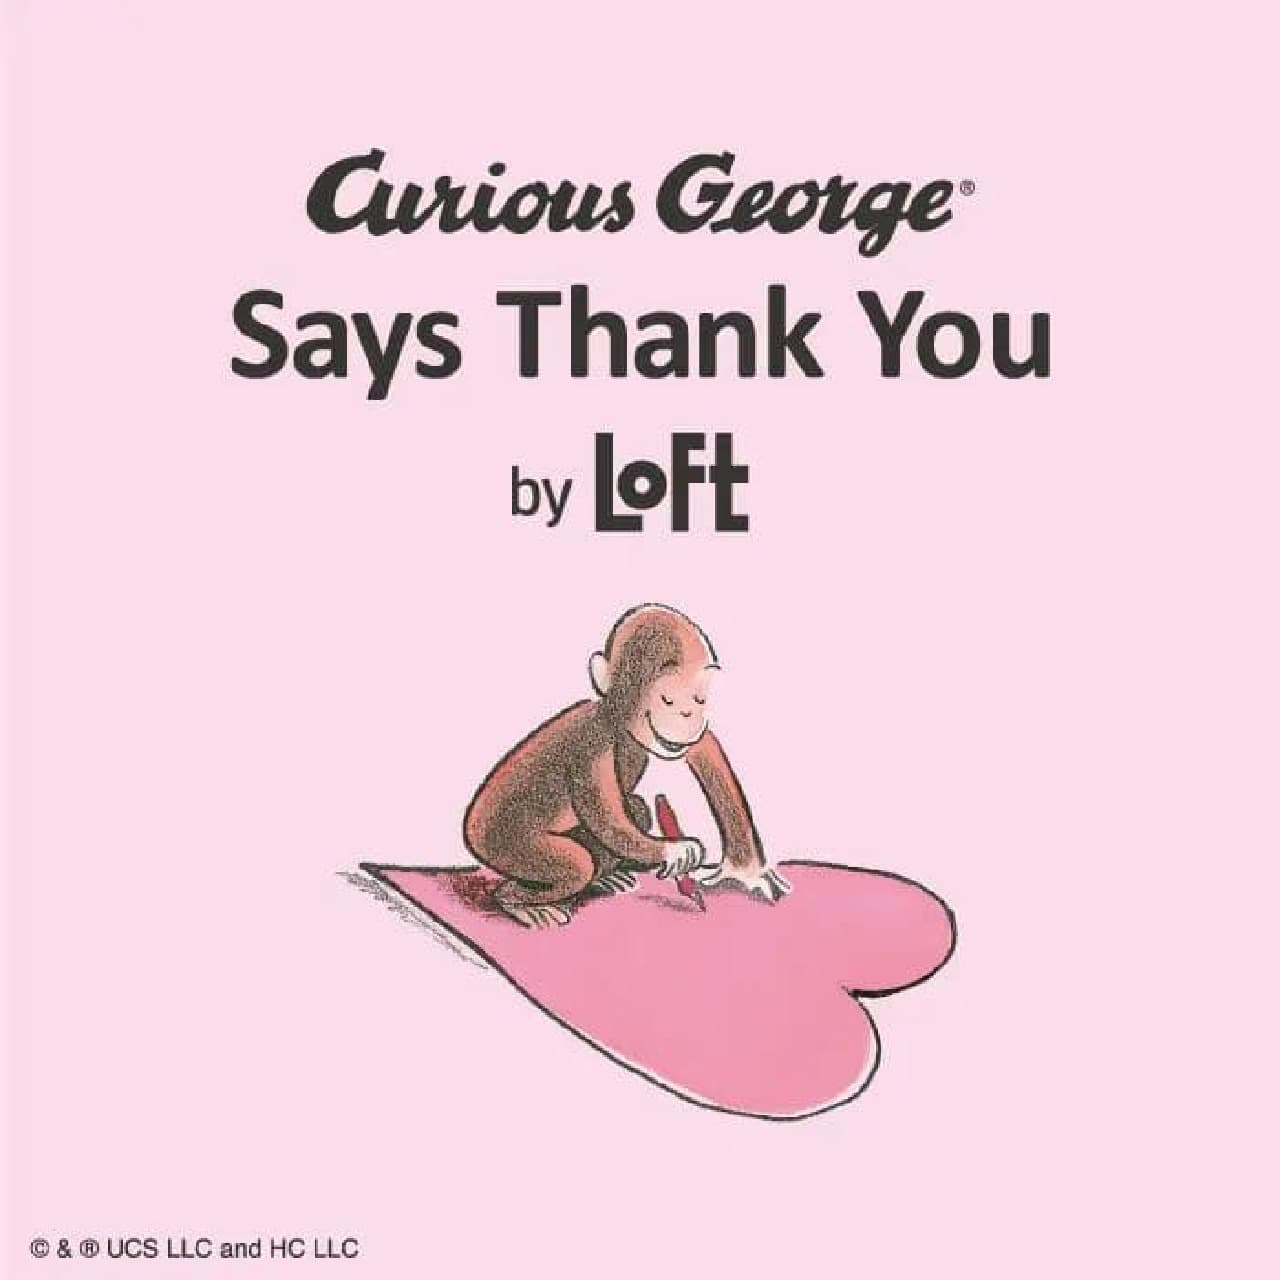 LOFT "Curious George Says Thank You by LOFT